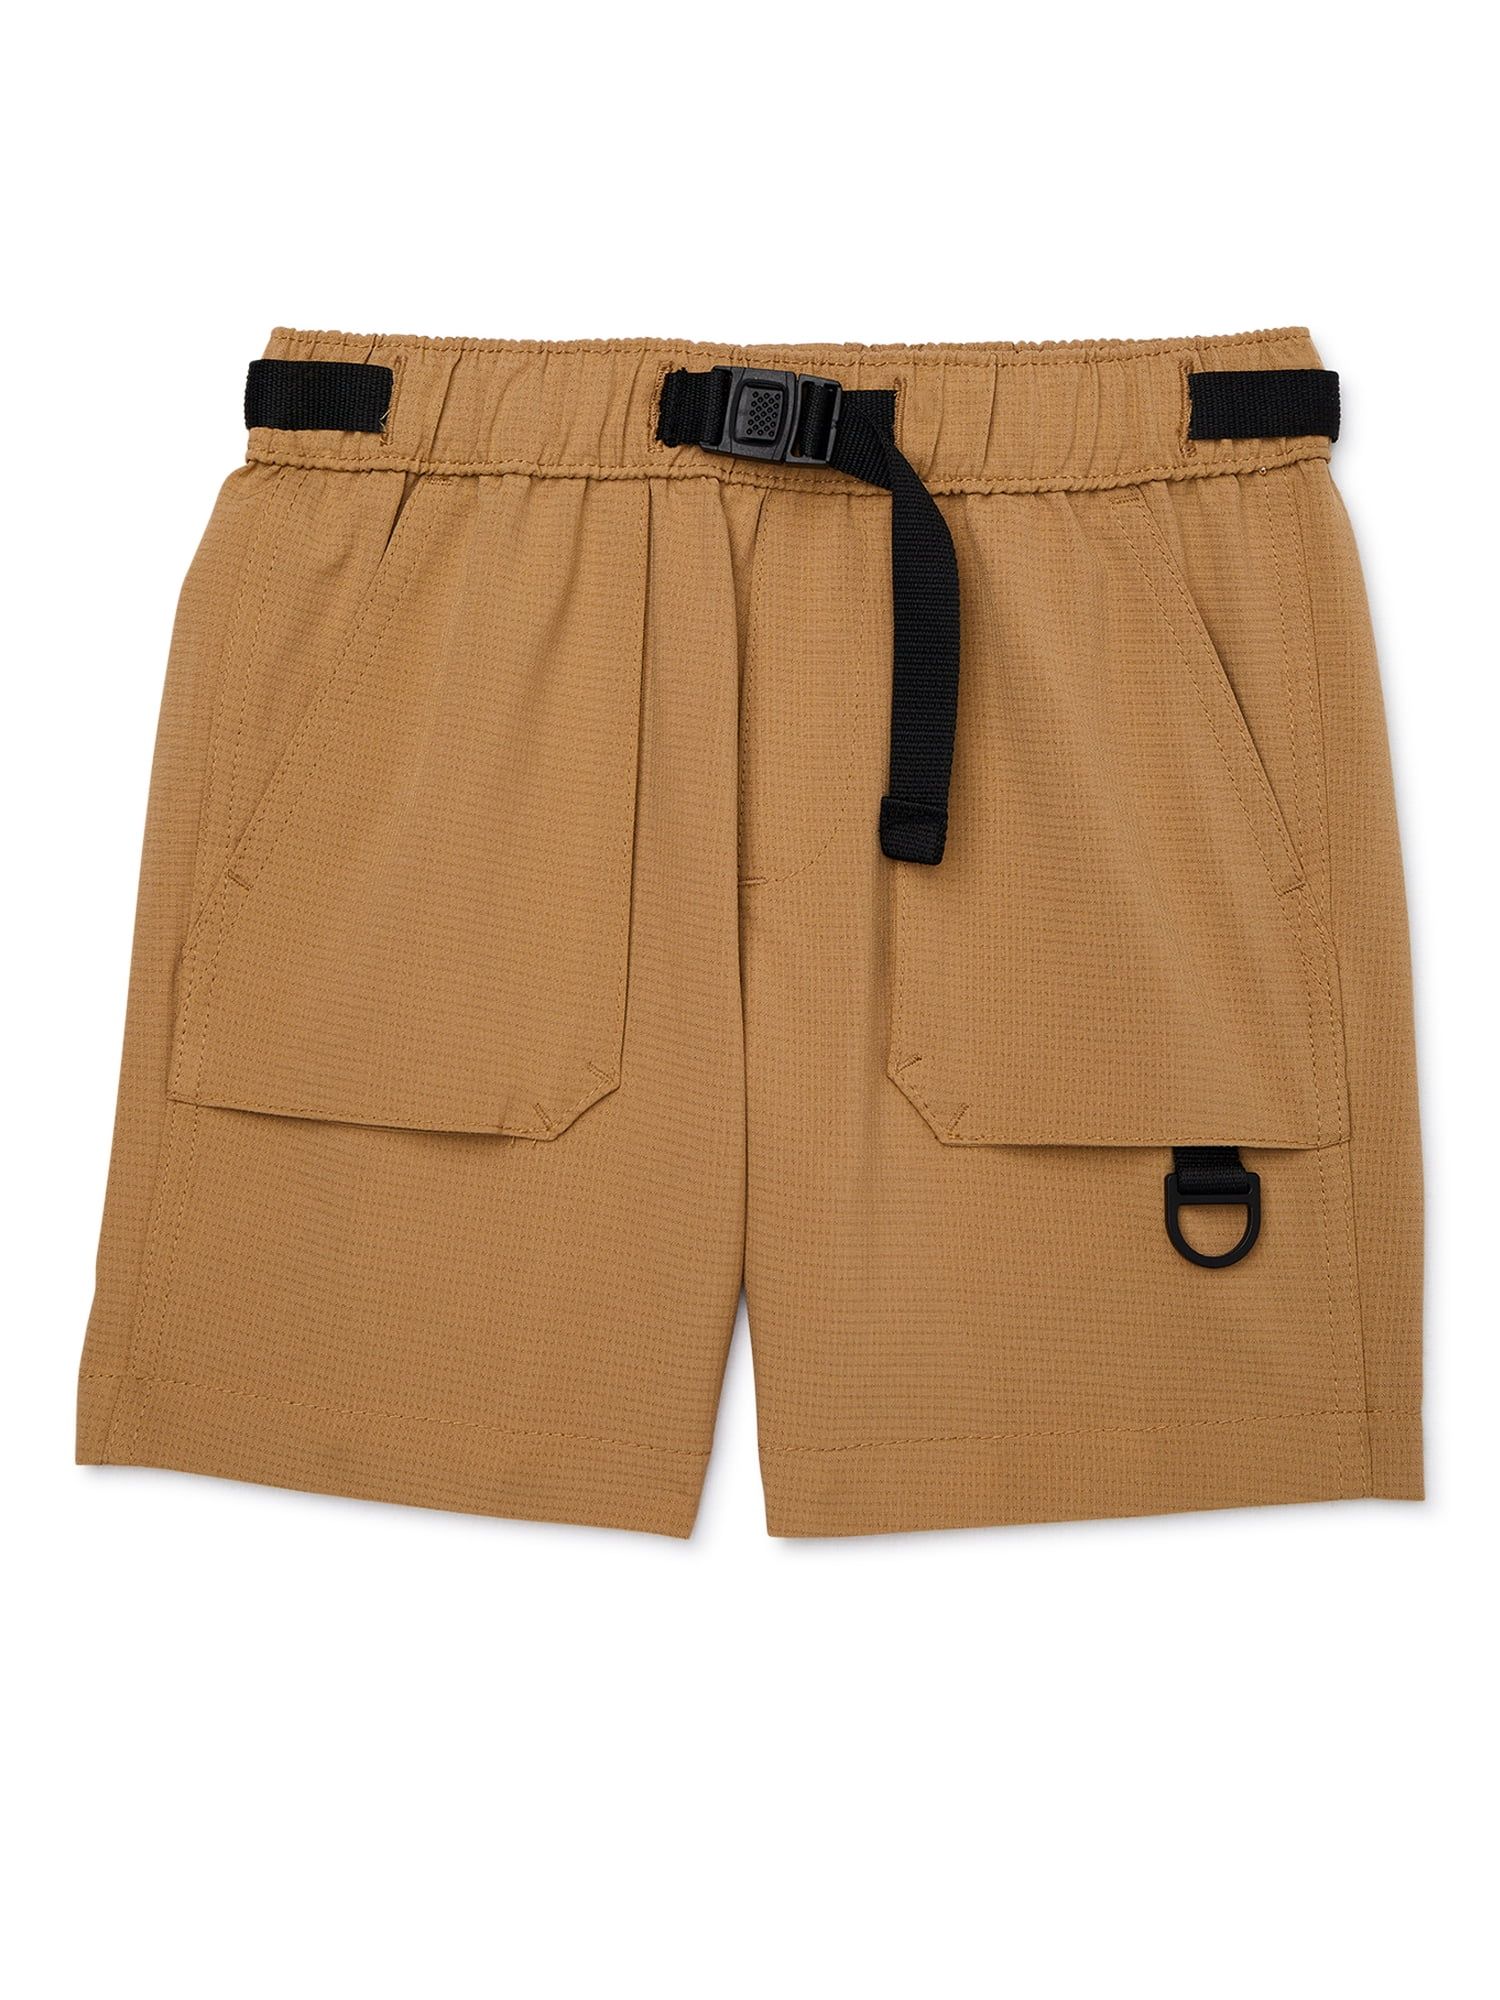 Wonder Nation Boys Buckle Shorts, Sizes 4-18 & Husky | Walmart (US)